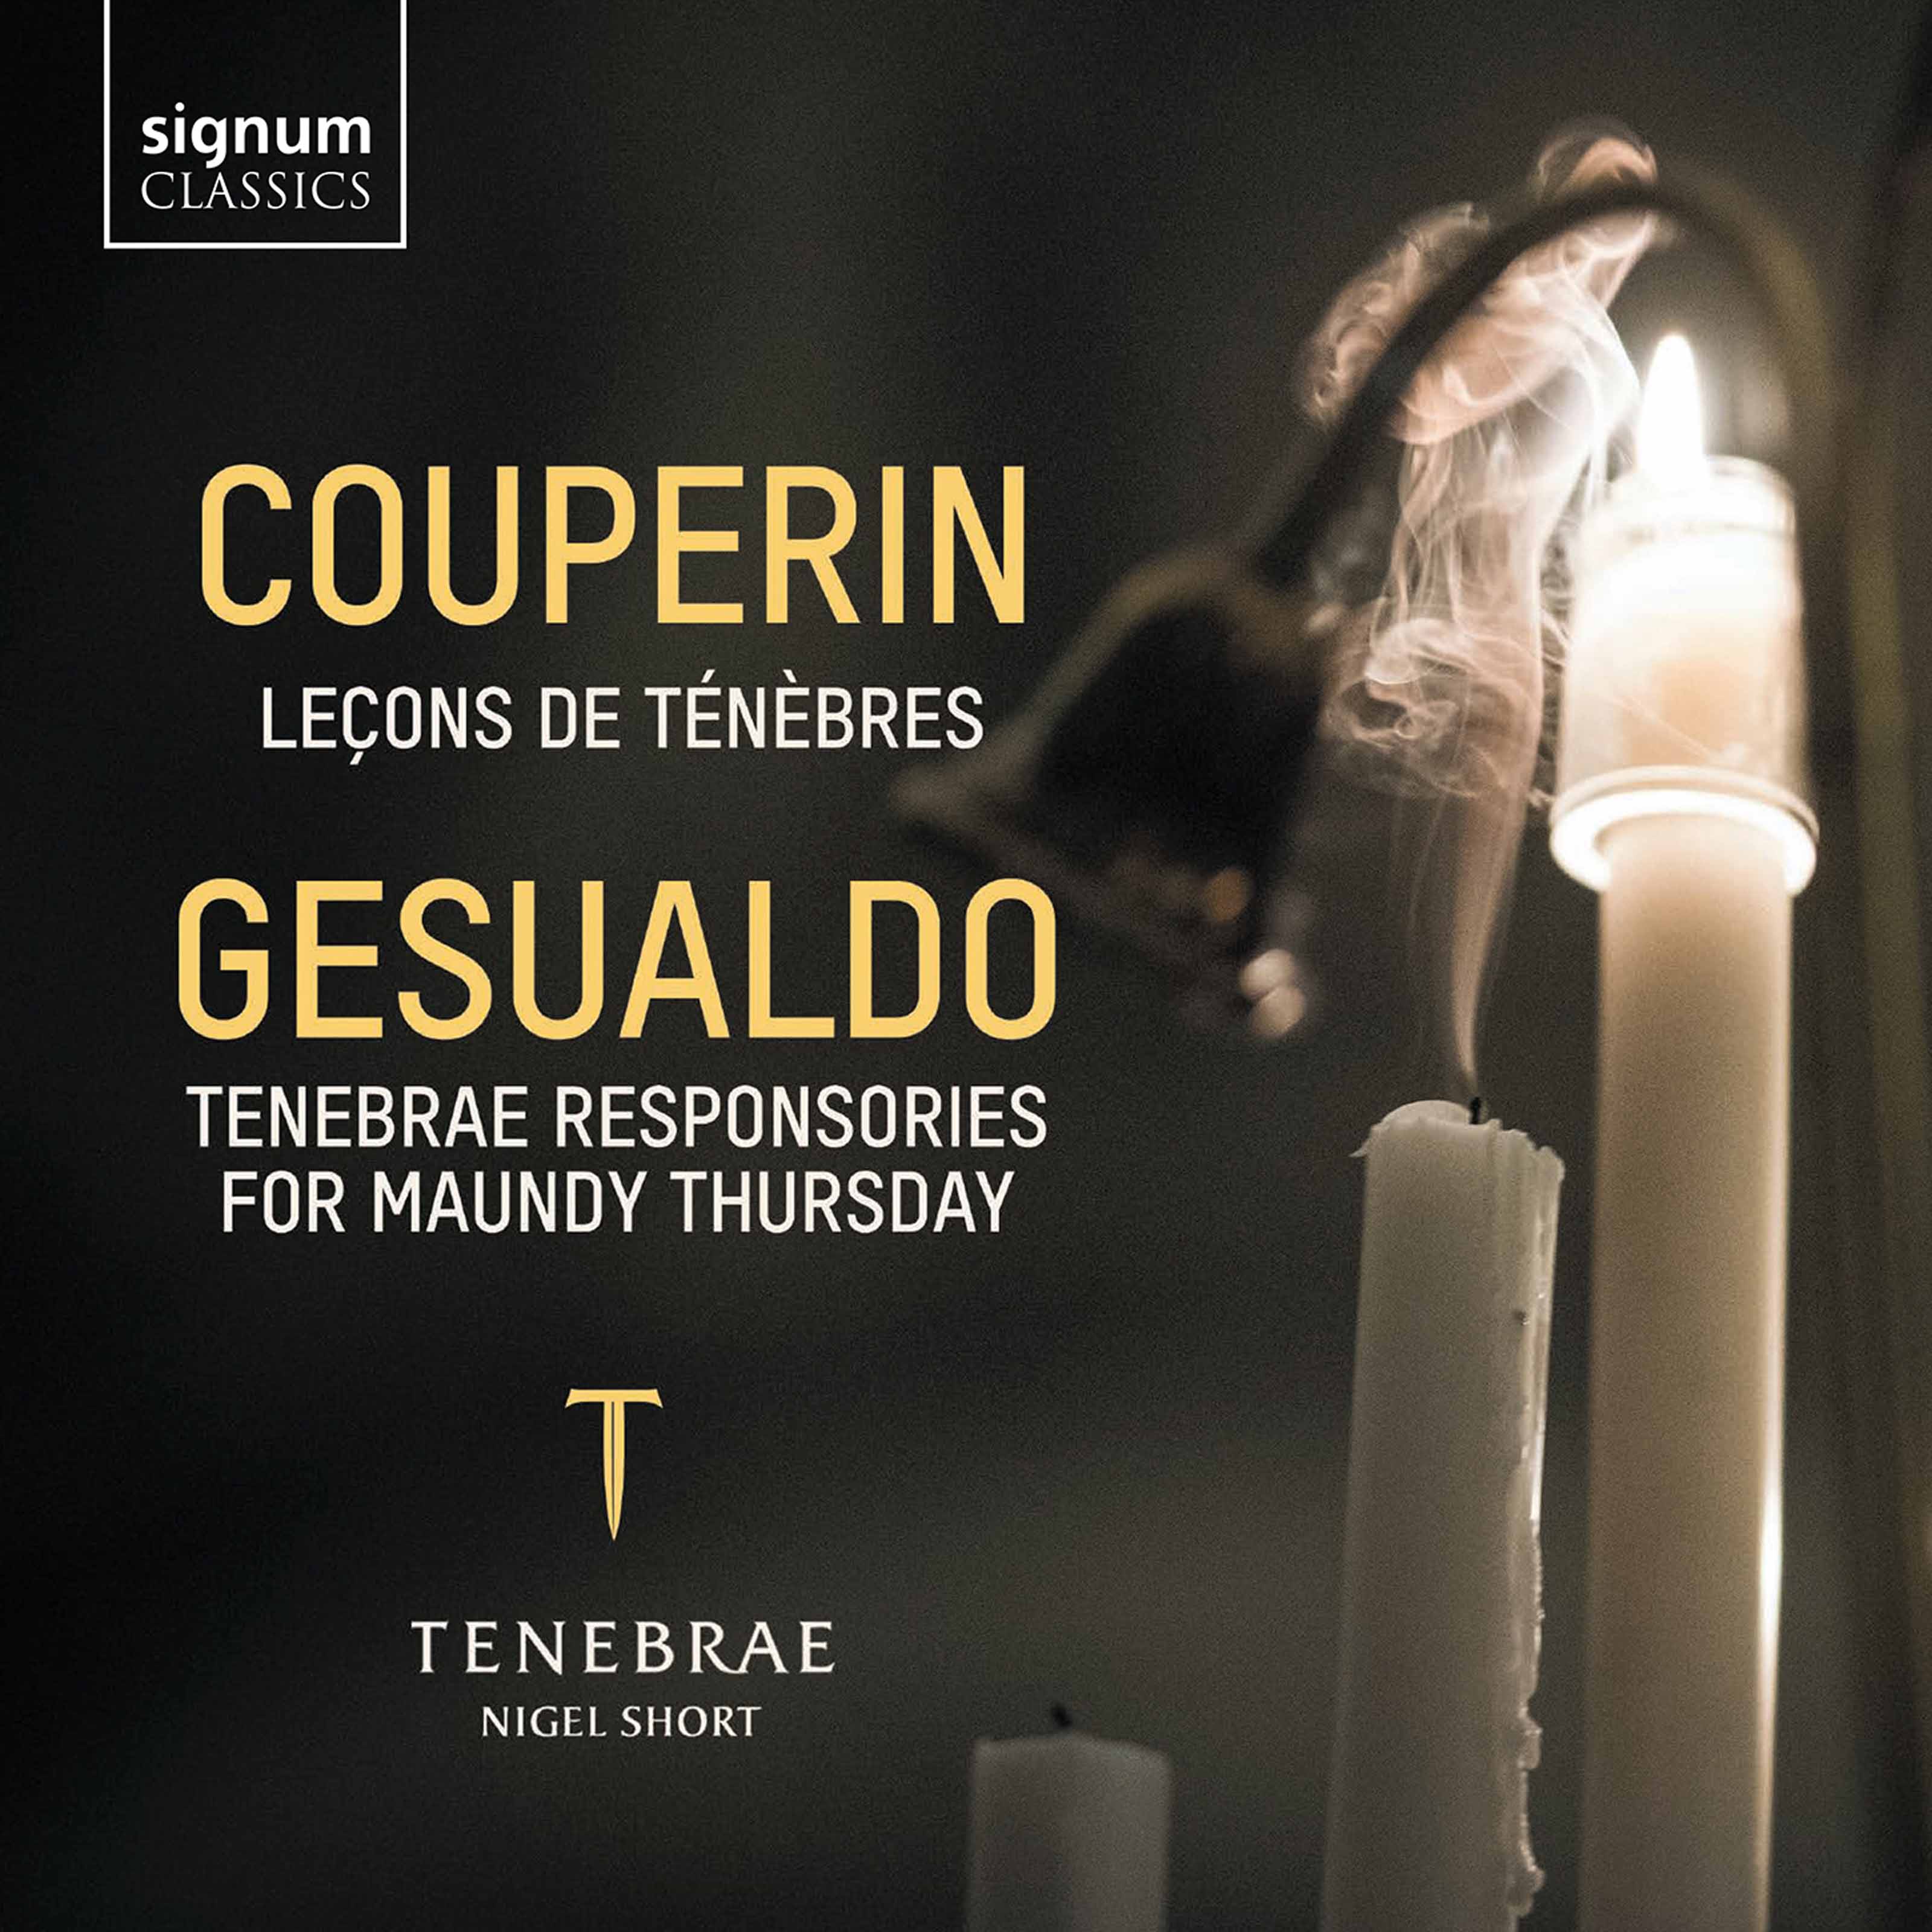 Signum　SIGCD622　Tenebrae　Gesualdo:　ArkivMusic　Couperin:　Buy　Tenebres　from　Lecons　Classics:　de　...